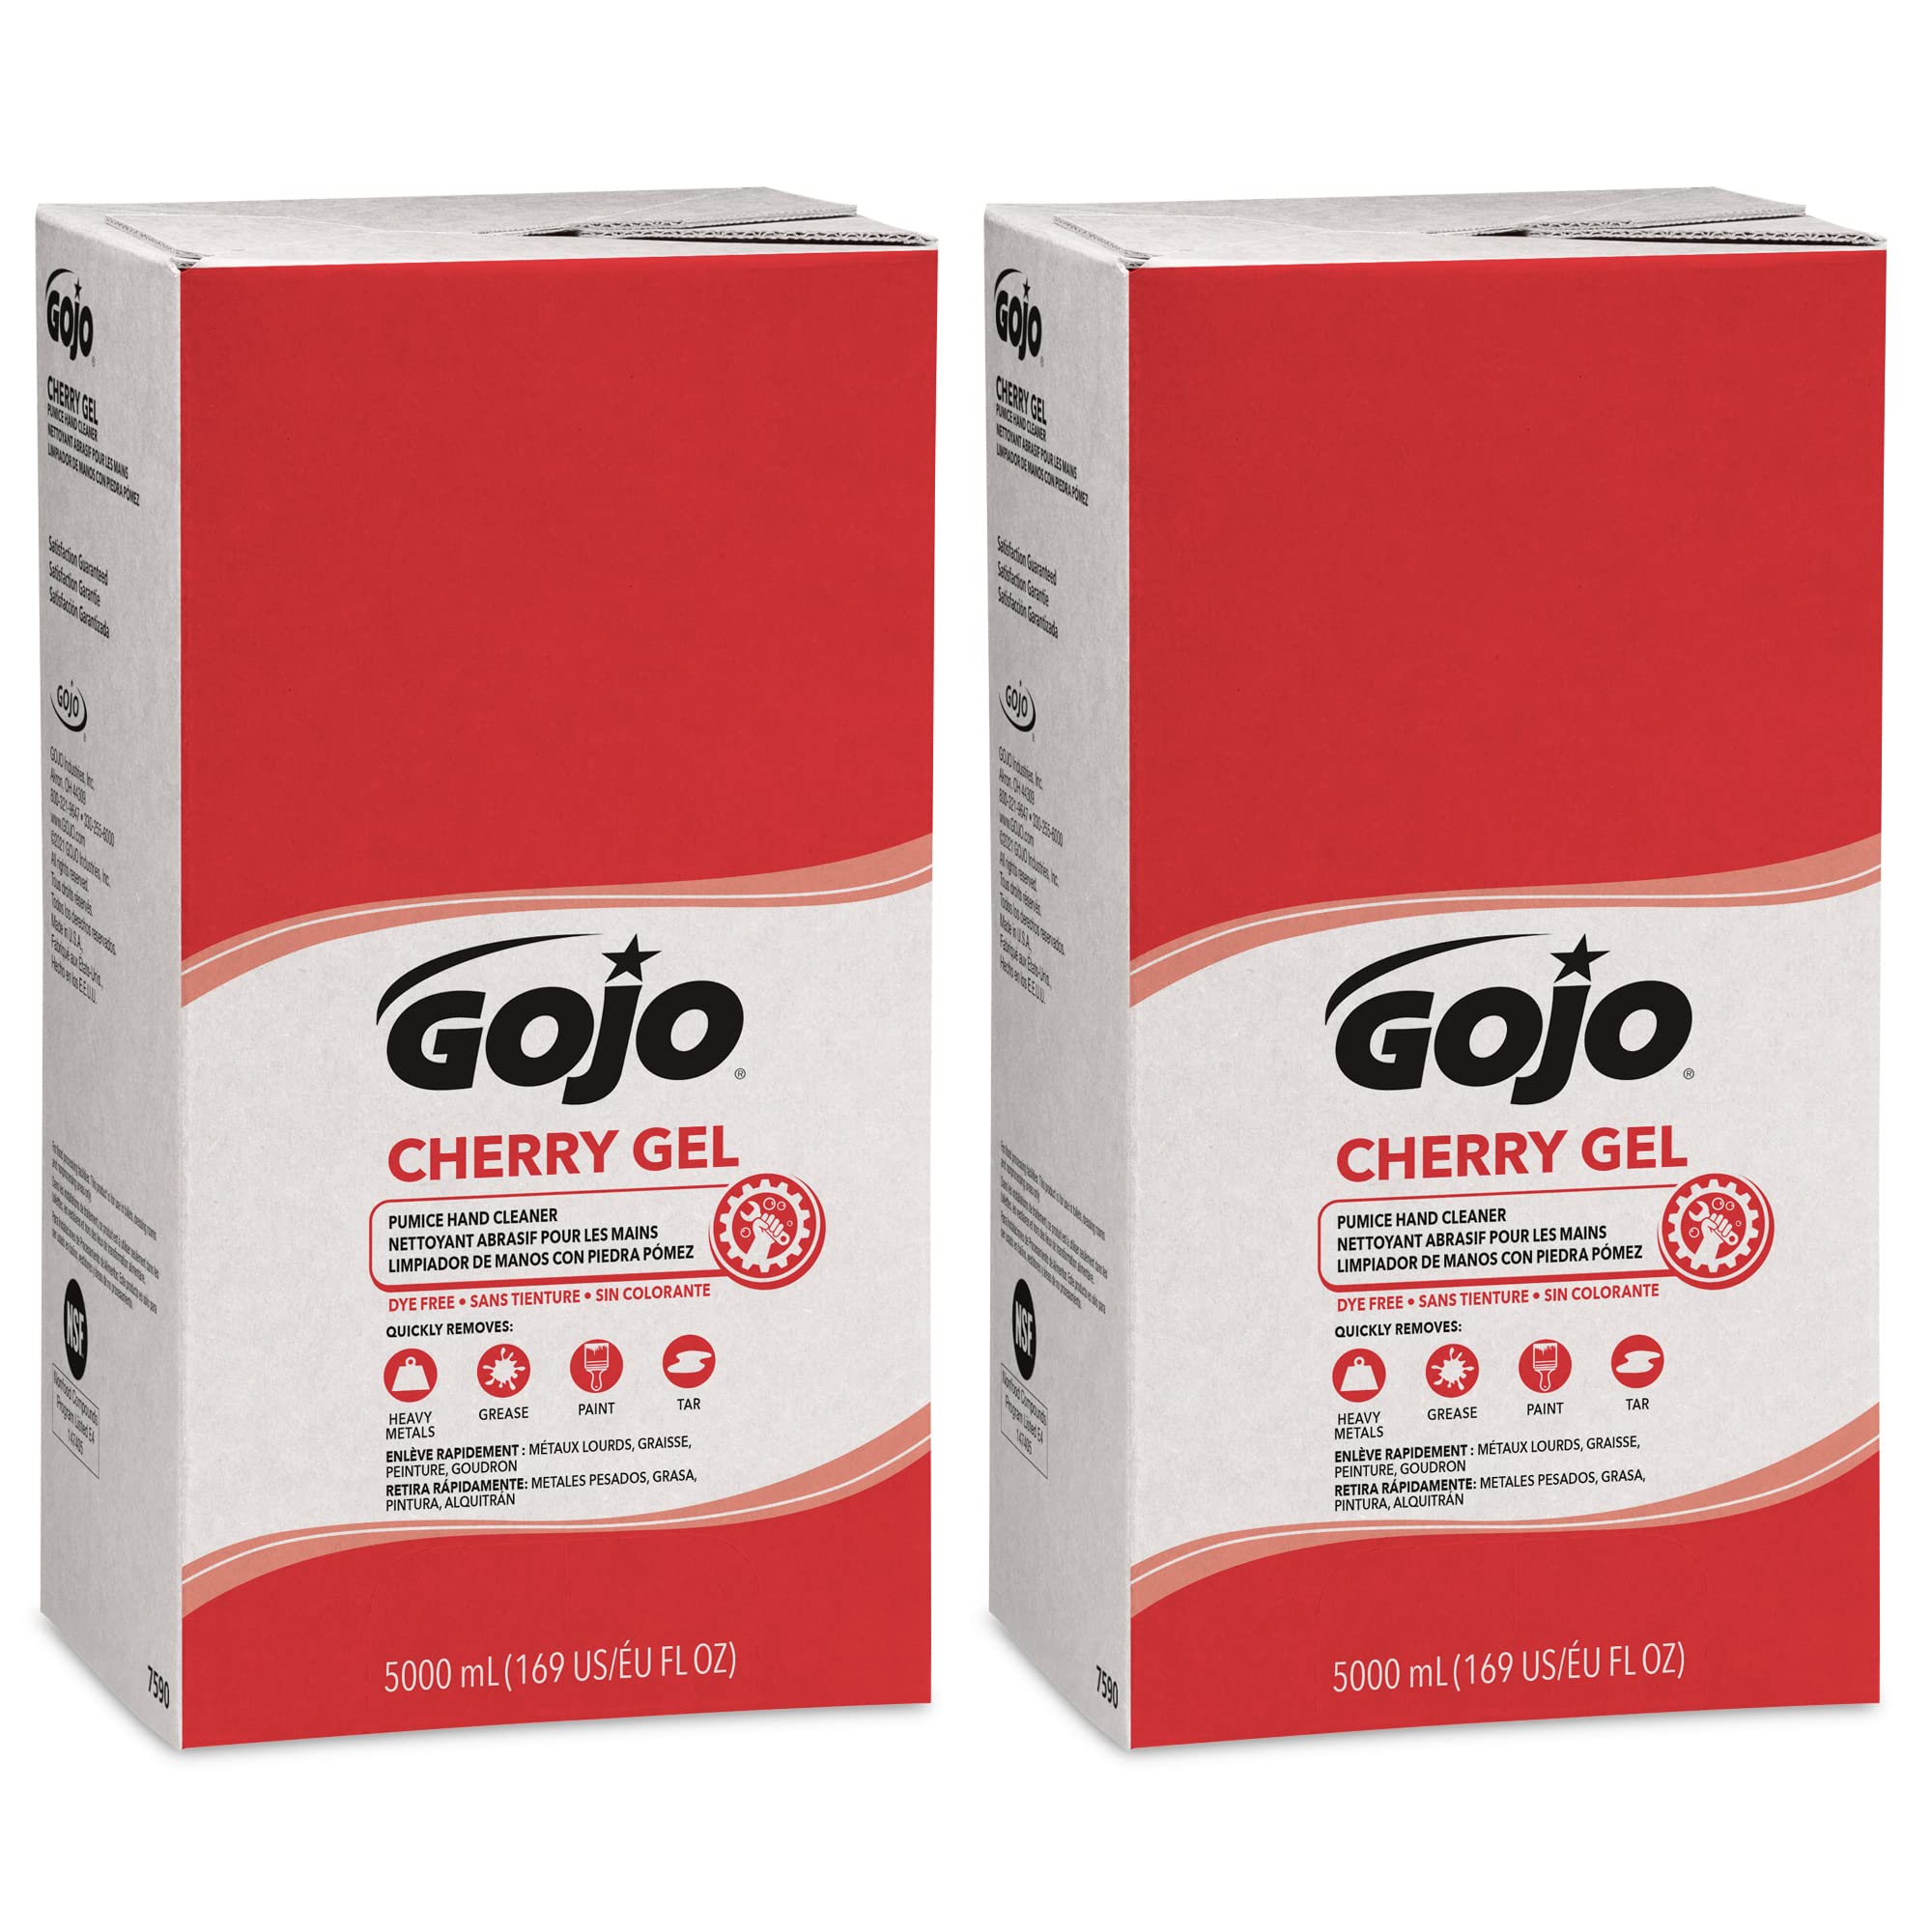 Gojo Cherry Gel Pumice Hand Cleaner, Cherry Fragrance, 5000 mL Heavy Duty Hand Cleaner Refill PRO TDX Push-Style Dispenser (Pack of 2) – 7590-02